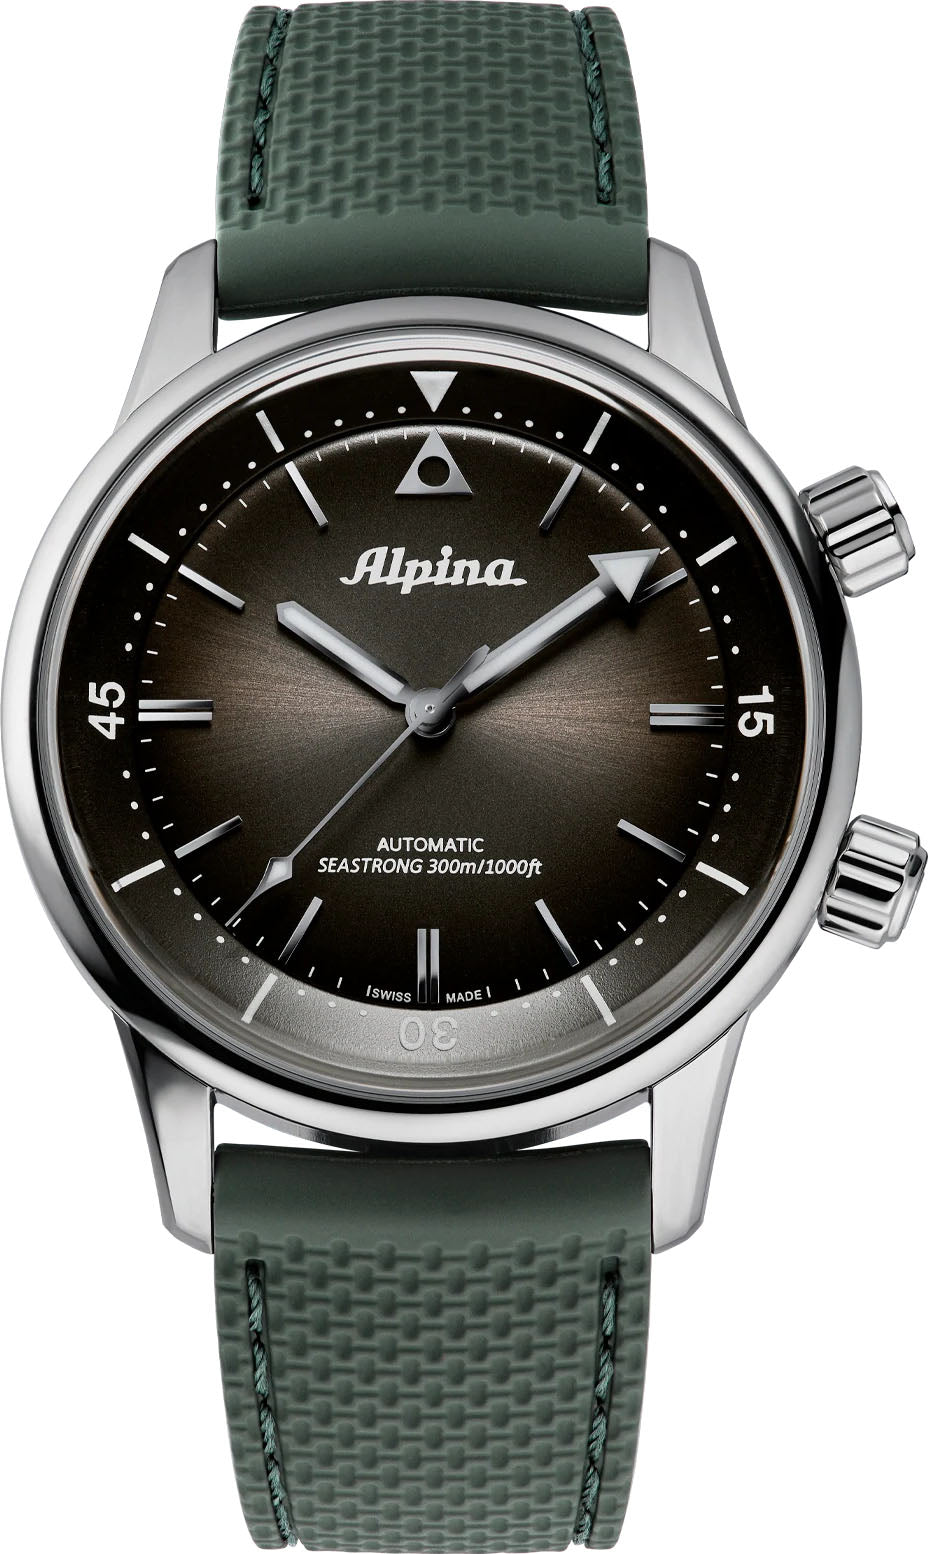 Photos - Wrist Watch Alpina Watch Seastrong Diver 300 Heritage Green ALP-367 